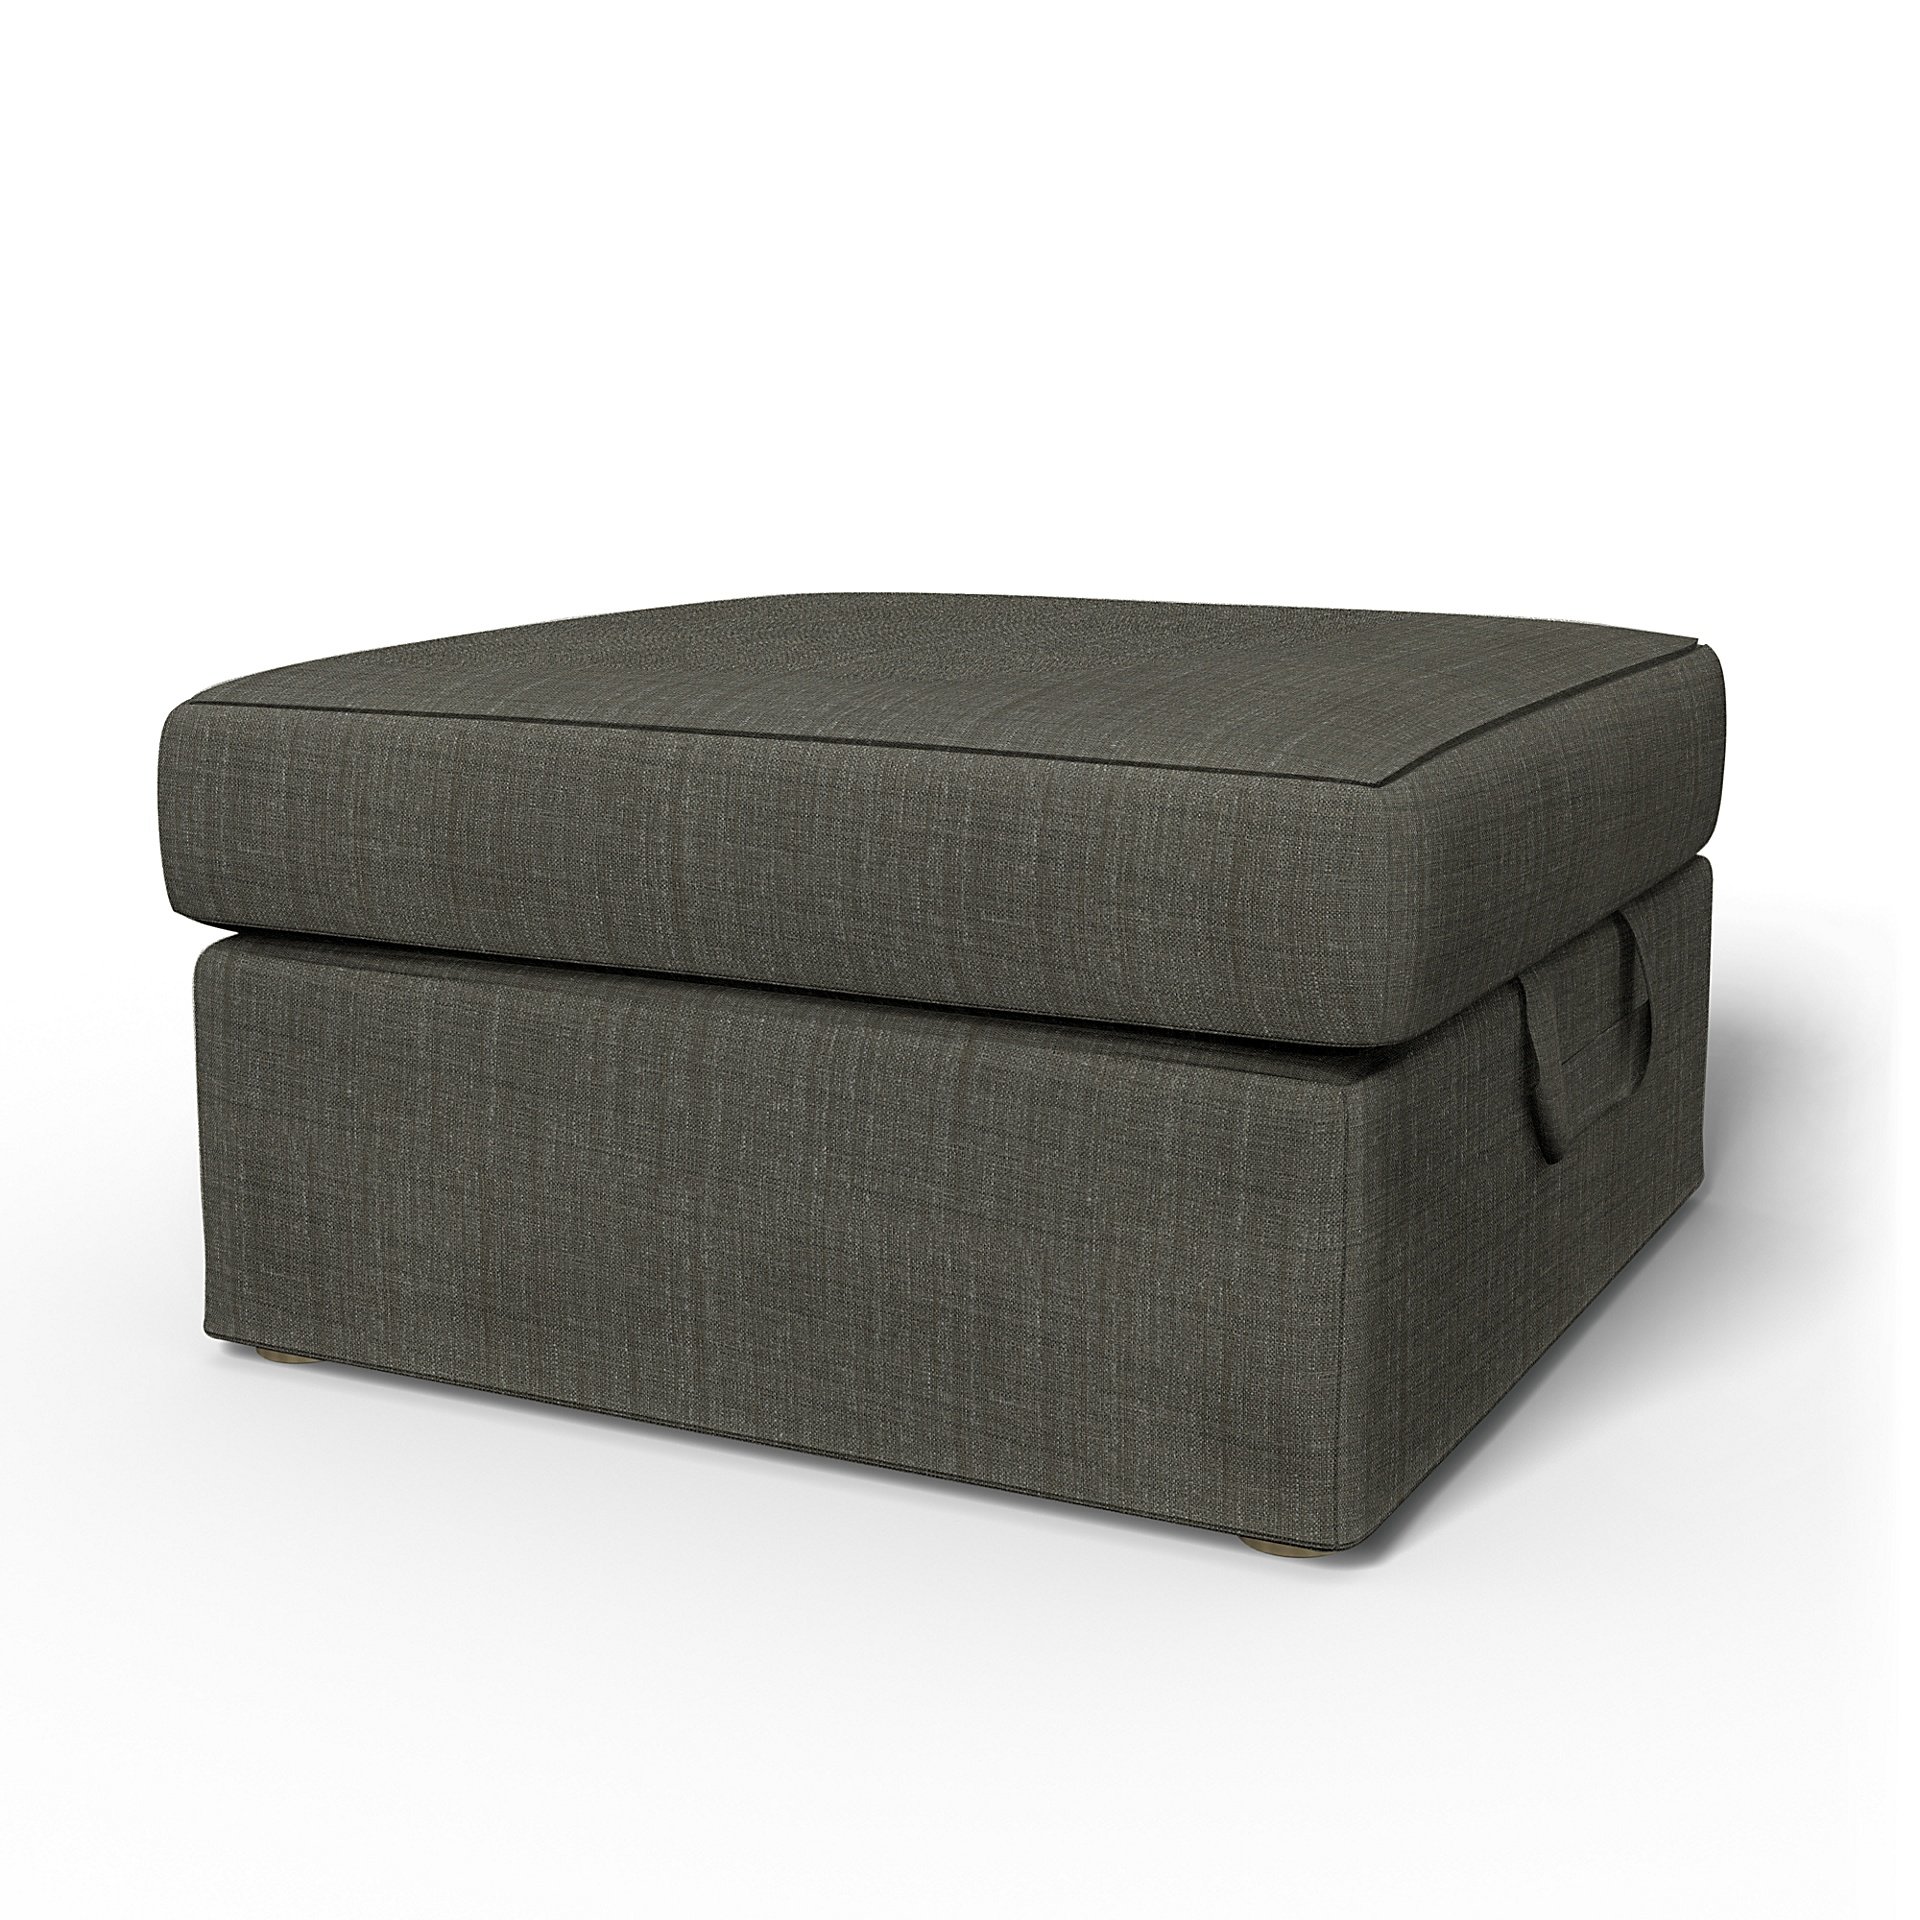 IKEA - Tomelilla Foto Footstool Cover, Mole Brown, Boucle & Texture - Bemz